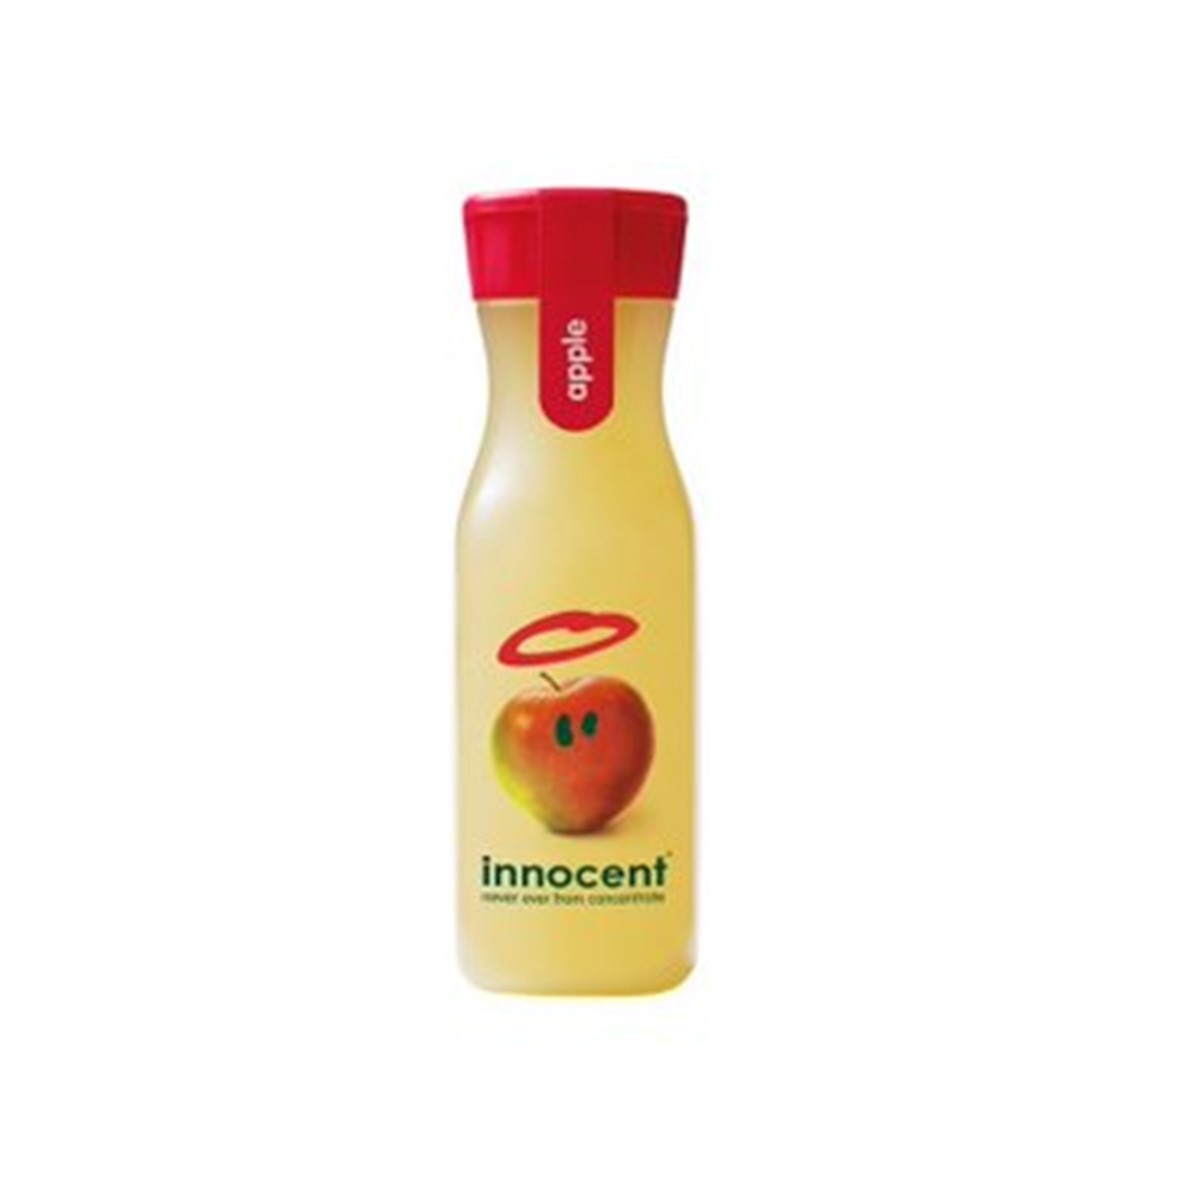 Innocent Juice Apple [fresh] - 8x330ml plastic bottles